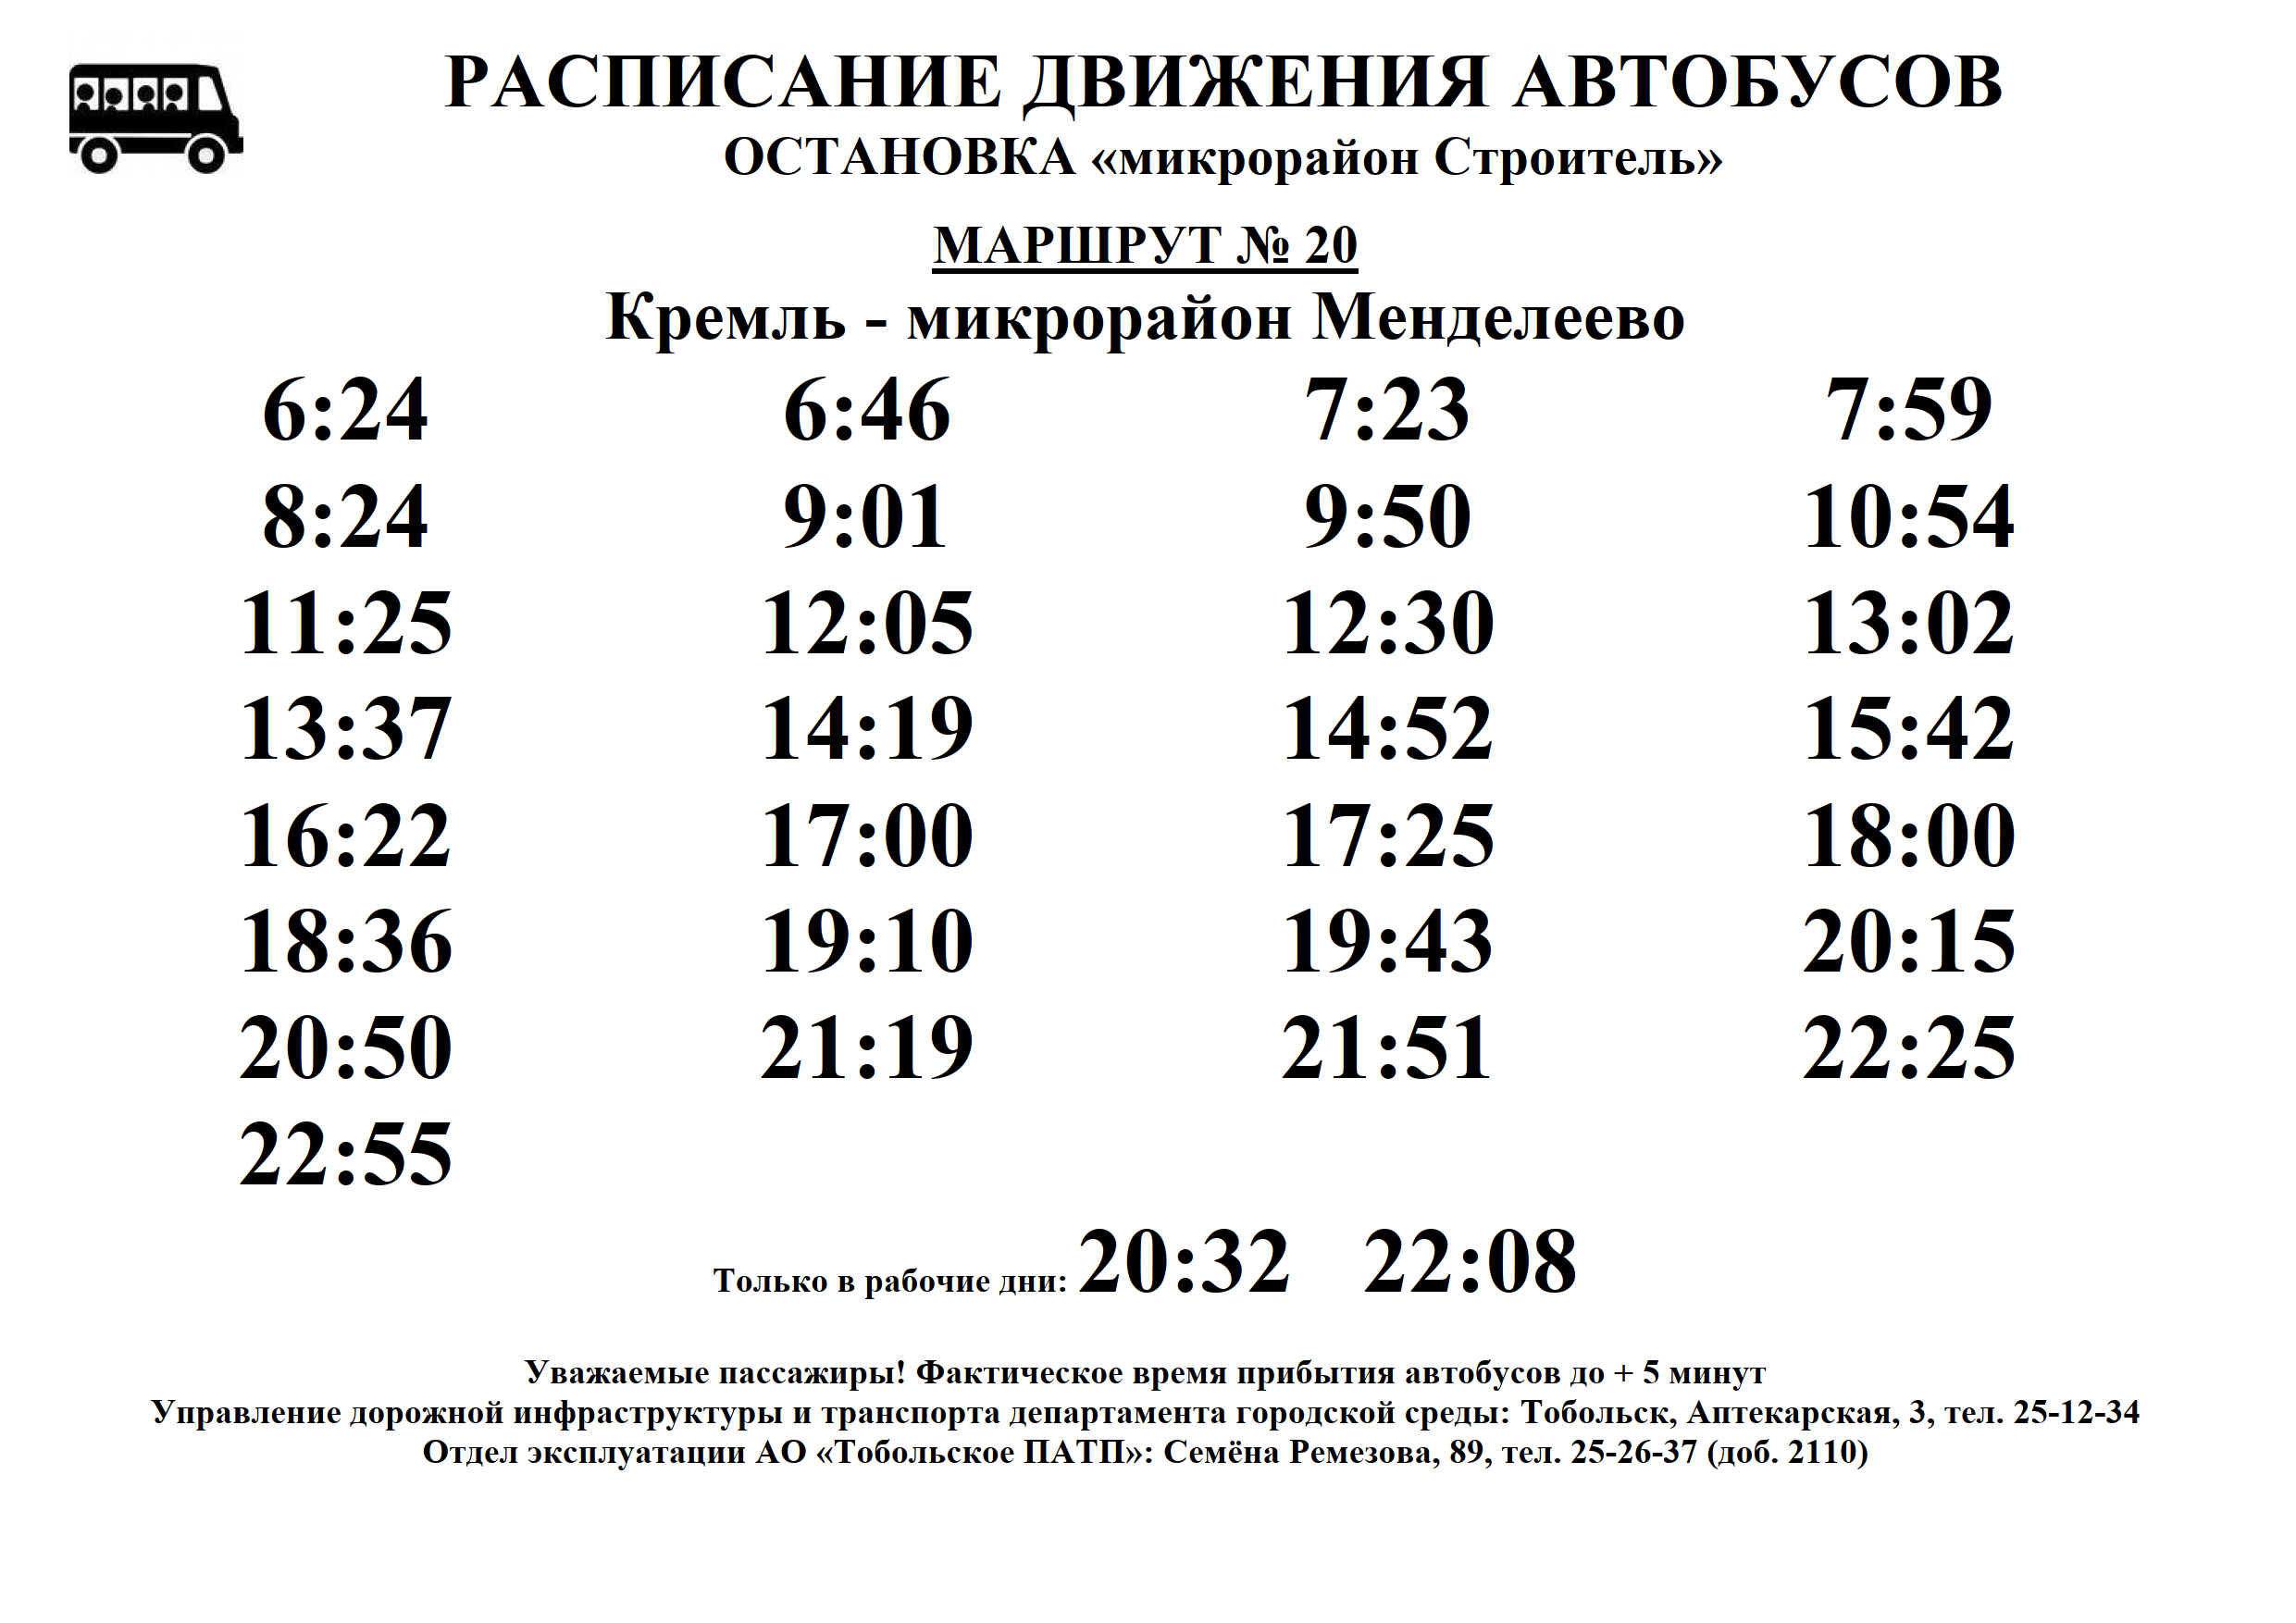 64a bus schedule.